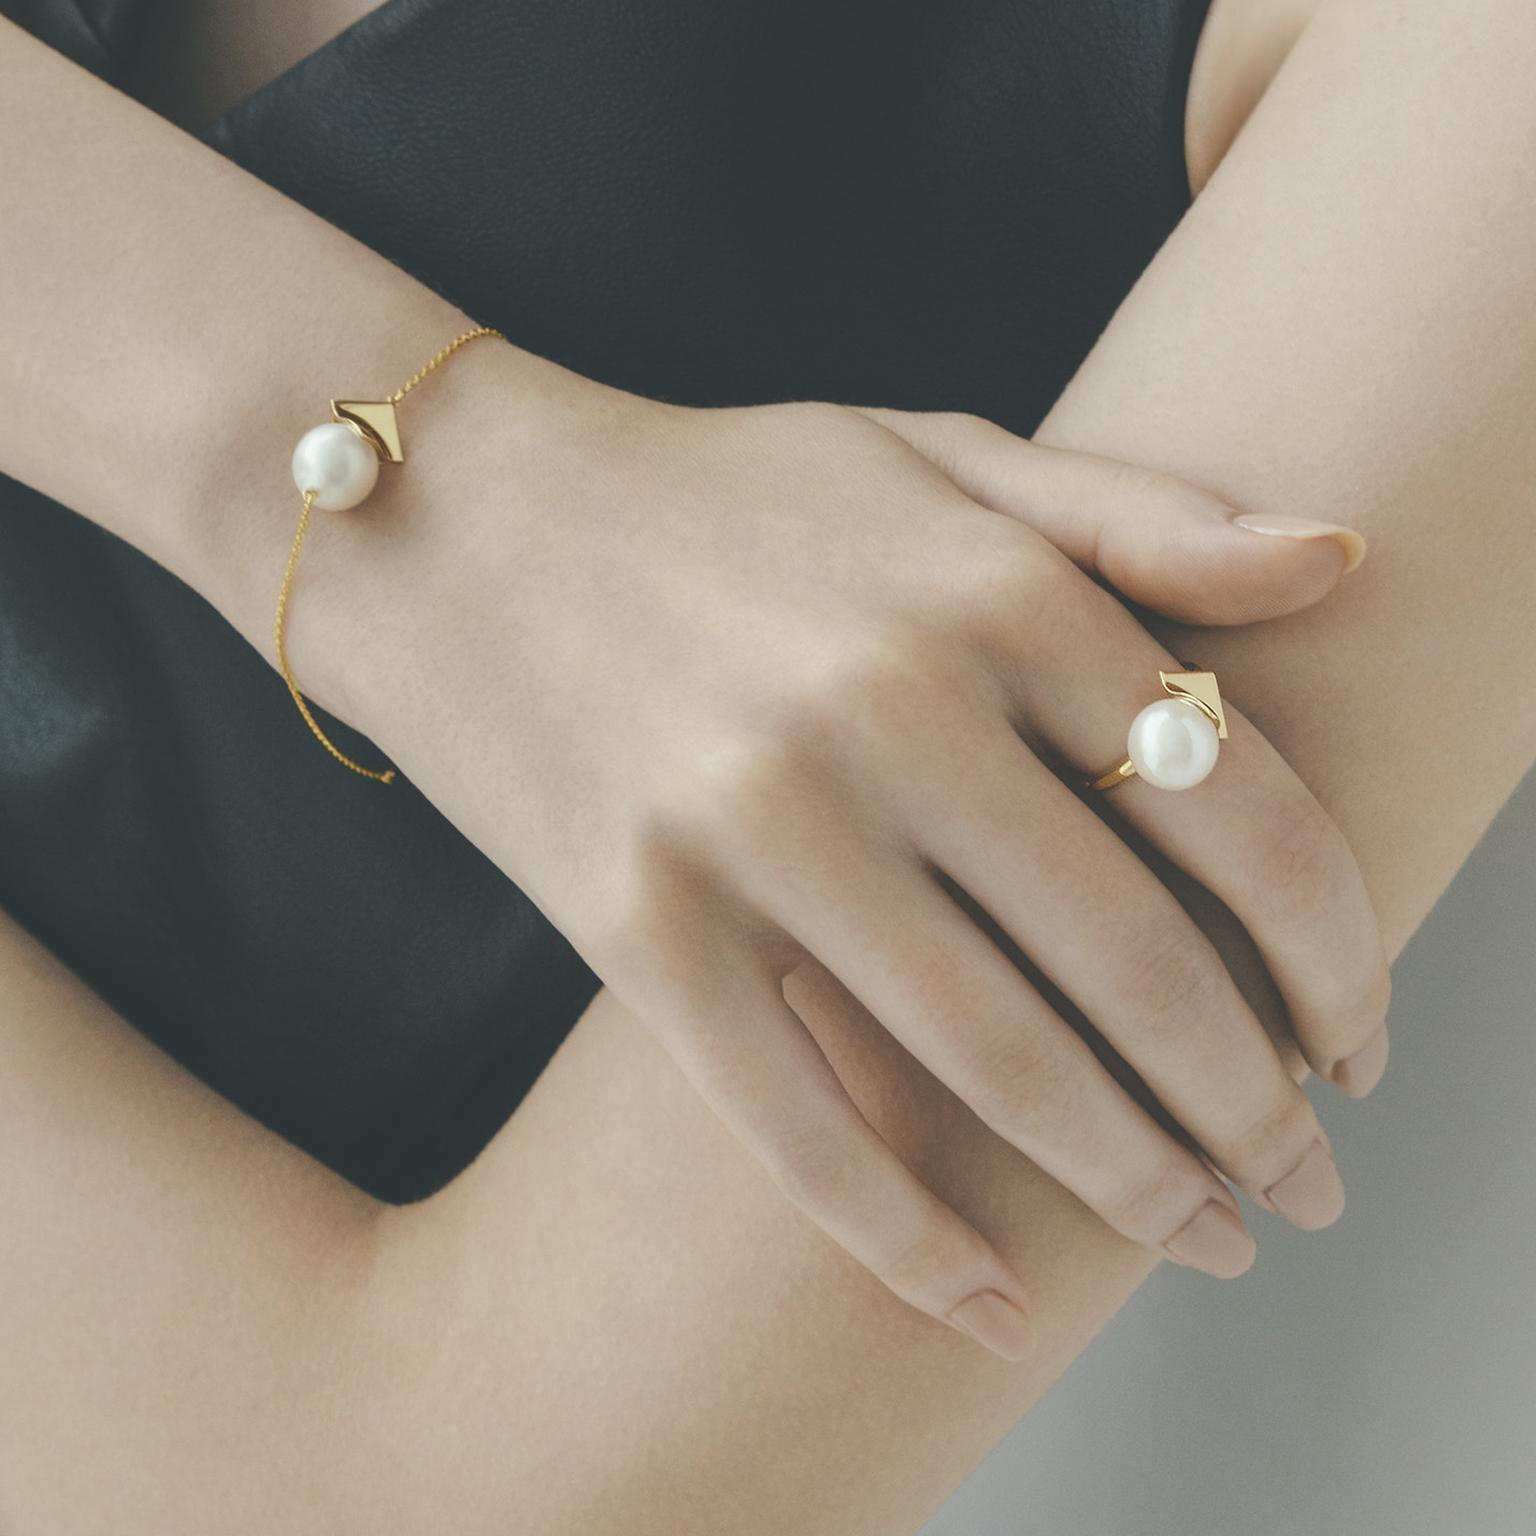 M:G Tasaki Square Leaf ring and bracelet on model